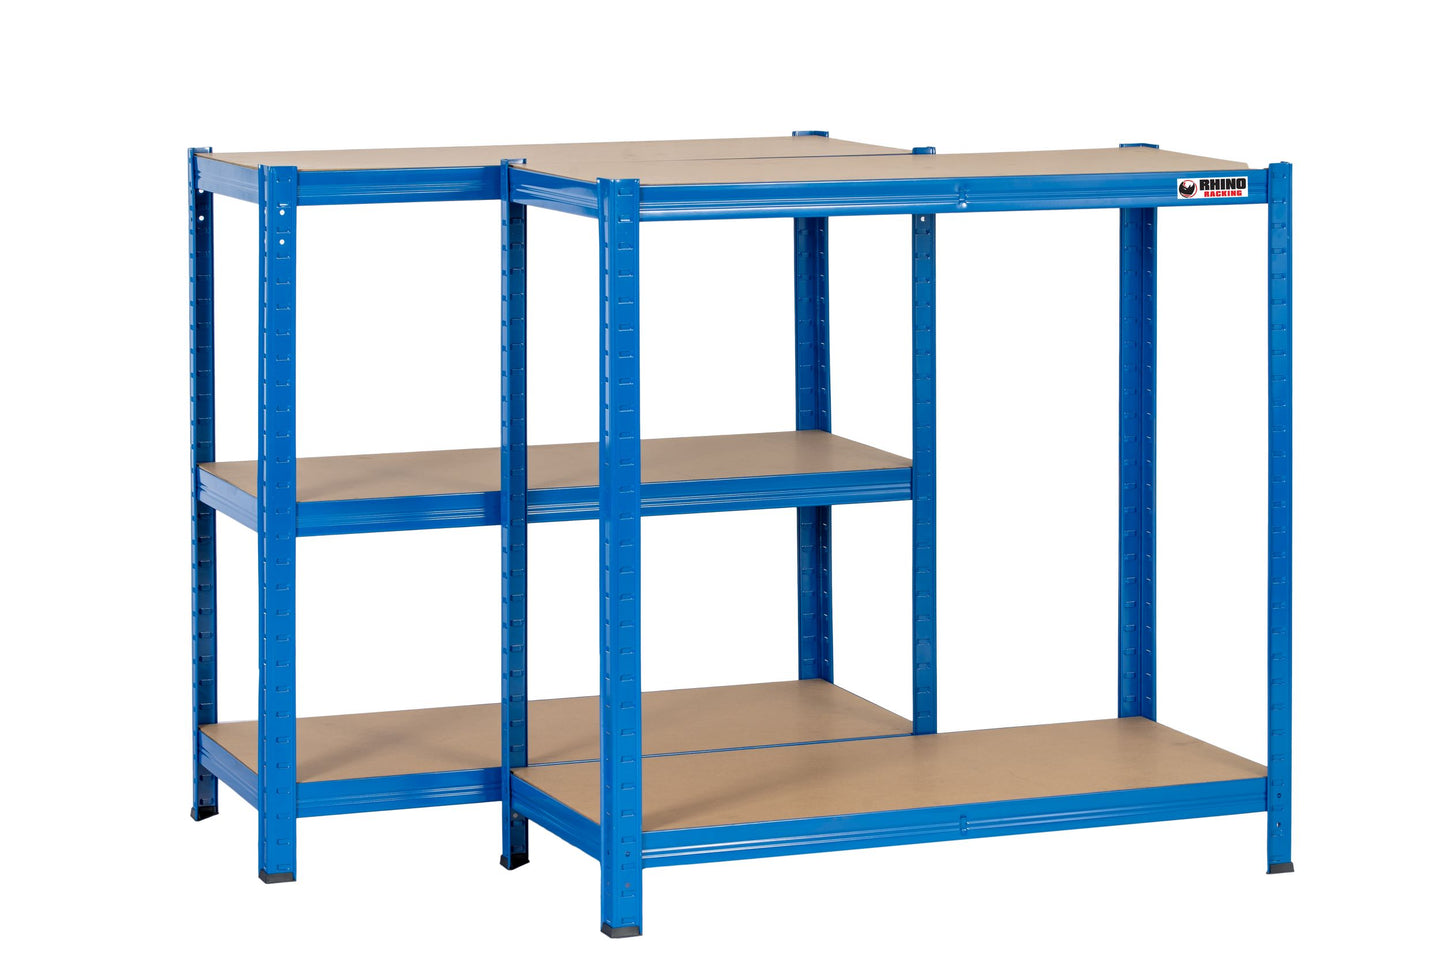 180 x 90 x 45cm | Blue | 5 Tier Boltless Heavy Duty Garage Shelving Unit | 1000kg Load Weight